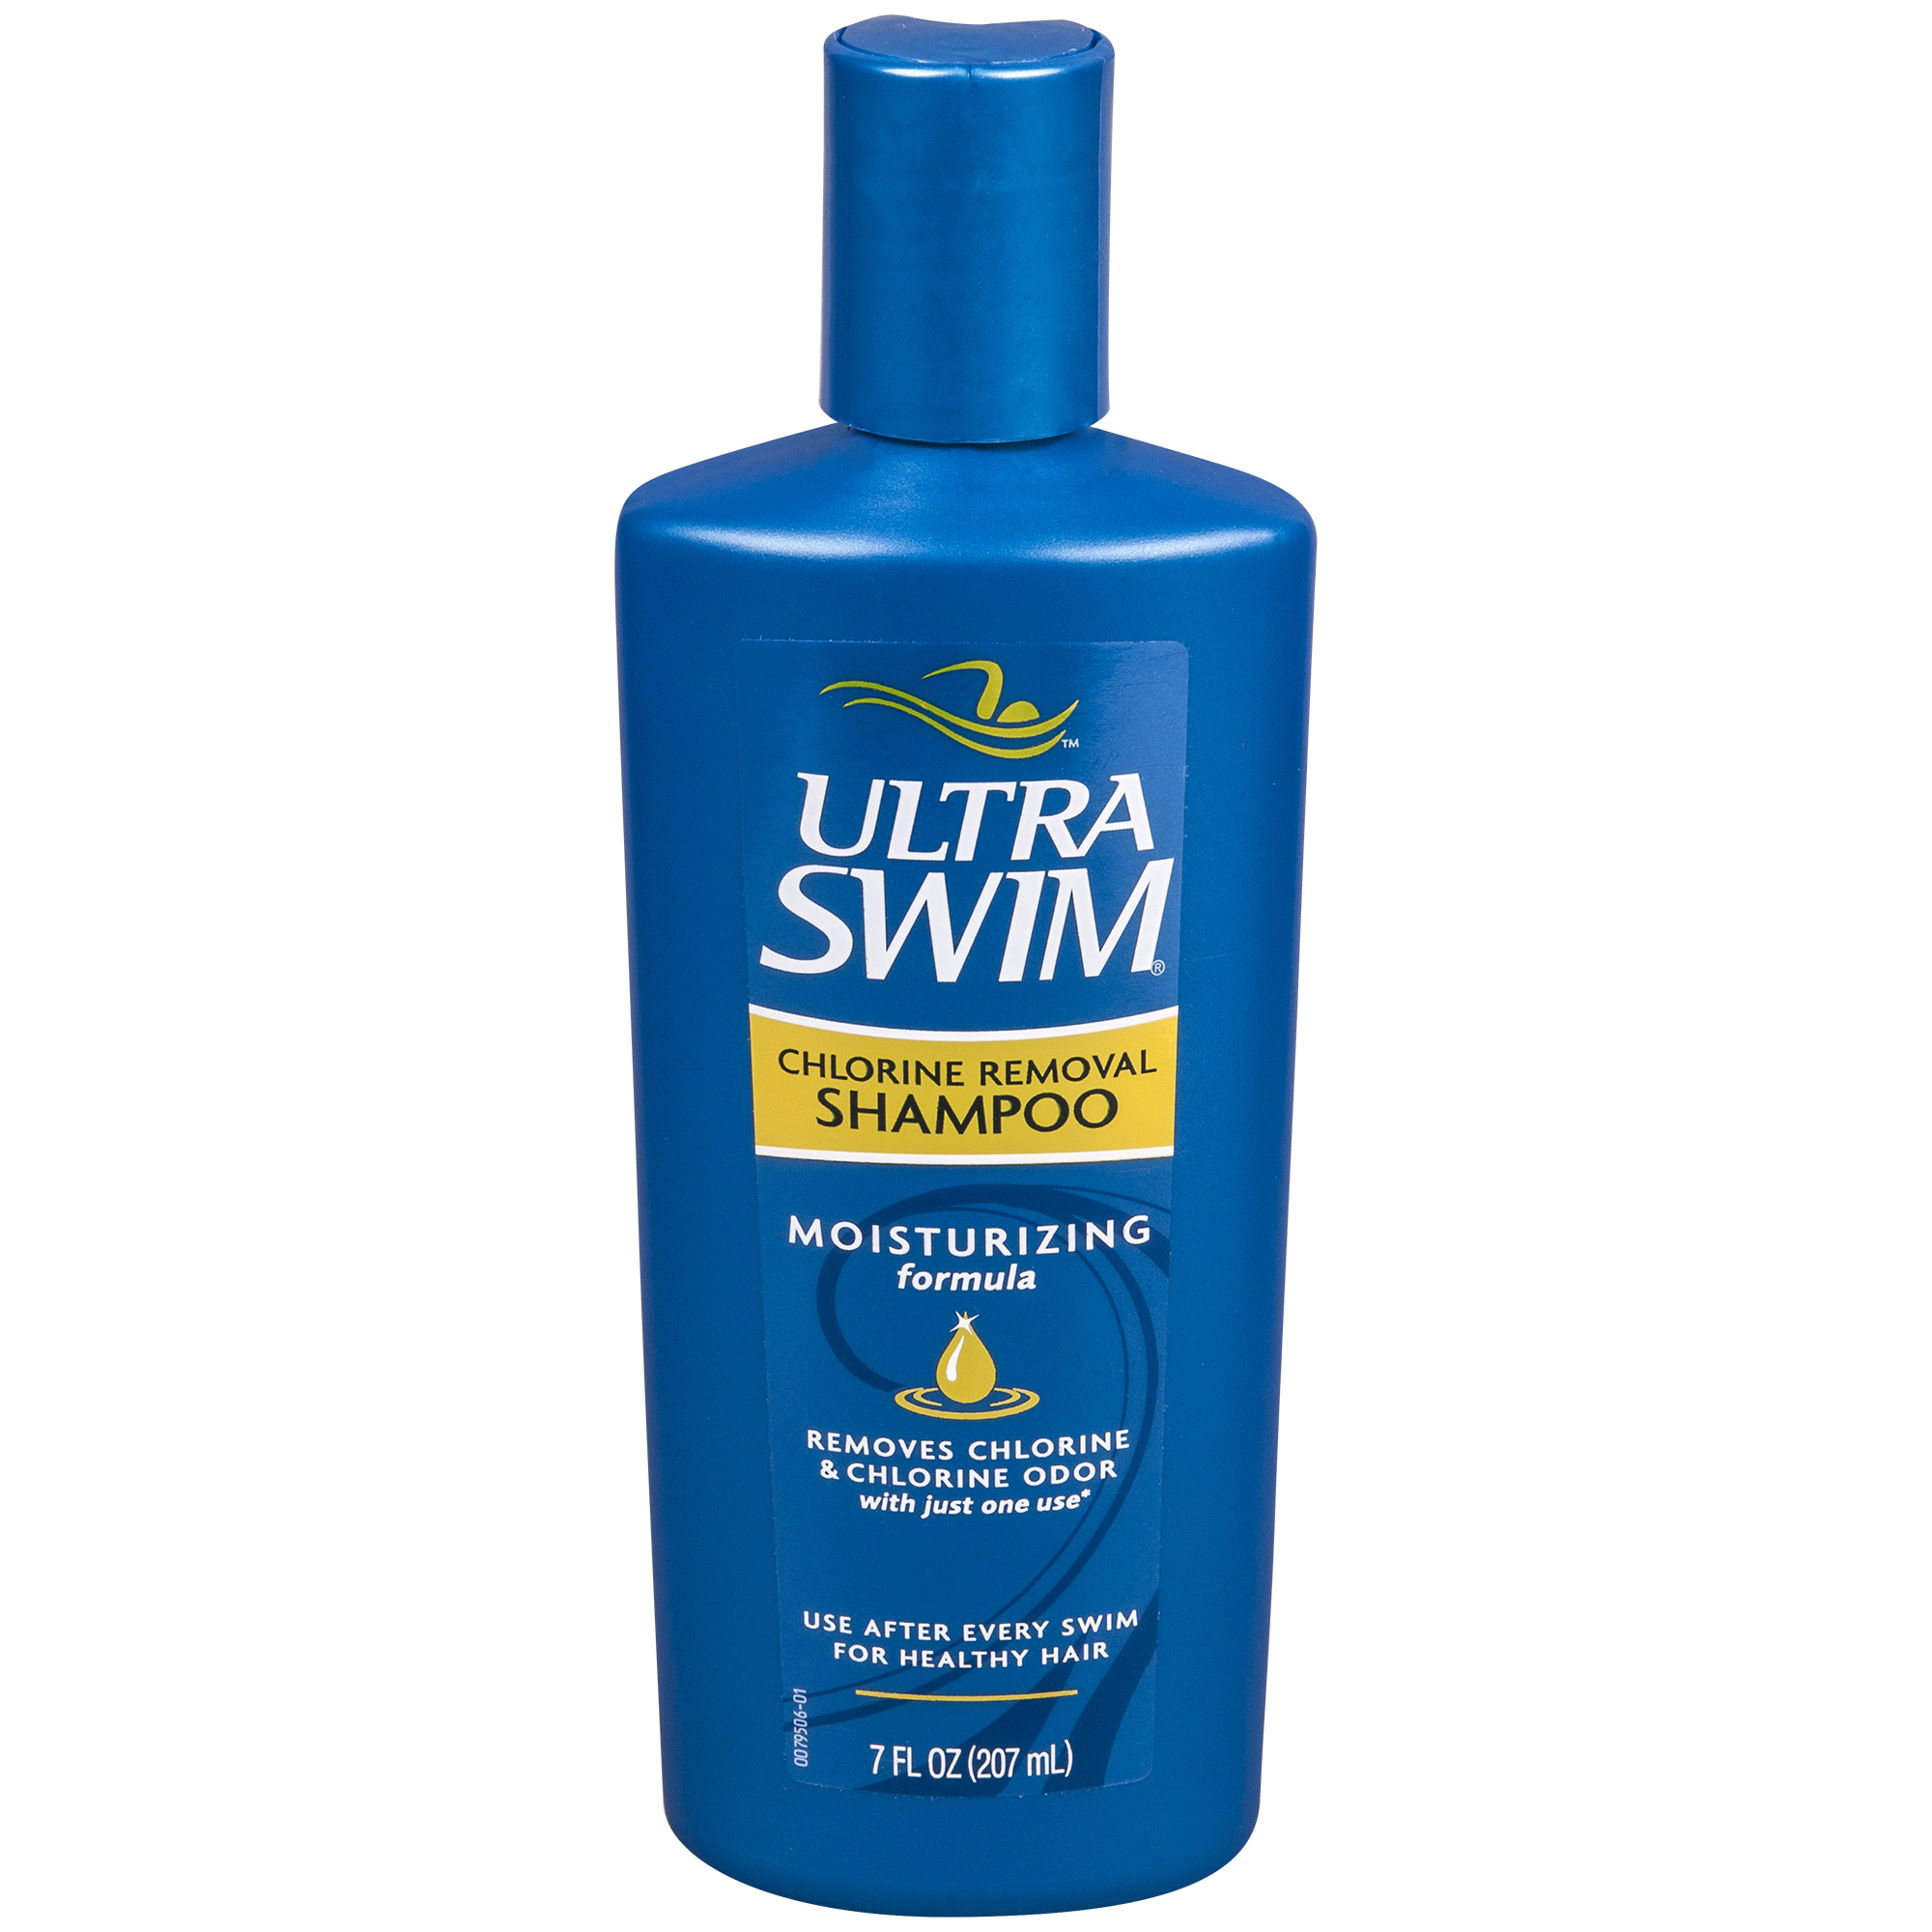 UltraSwim Chlorine Removal Shampoo, Moisturizing Formula 7 oz - image 1 of 12